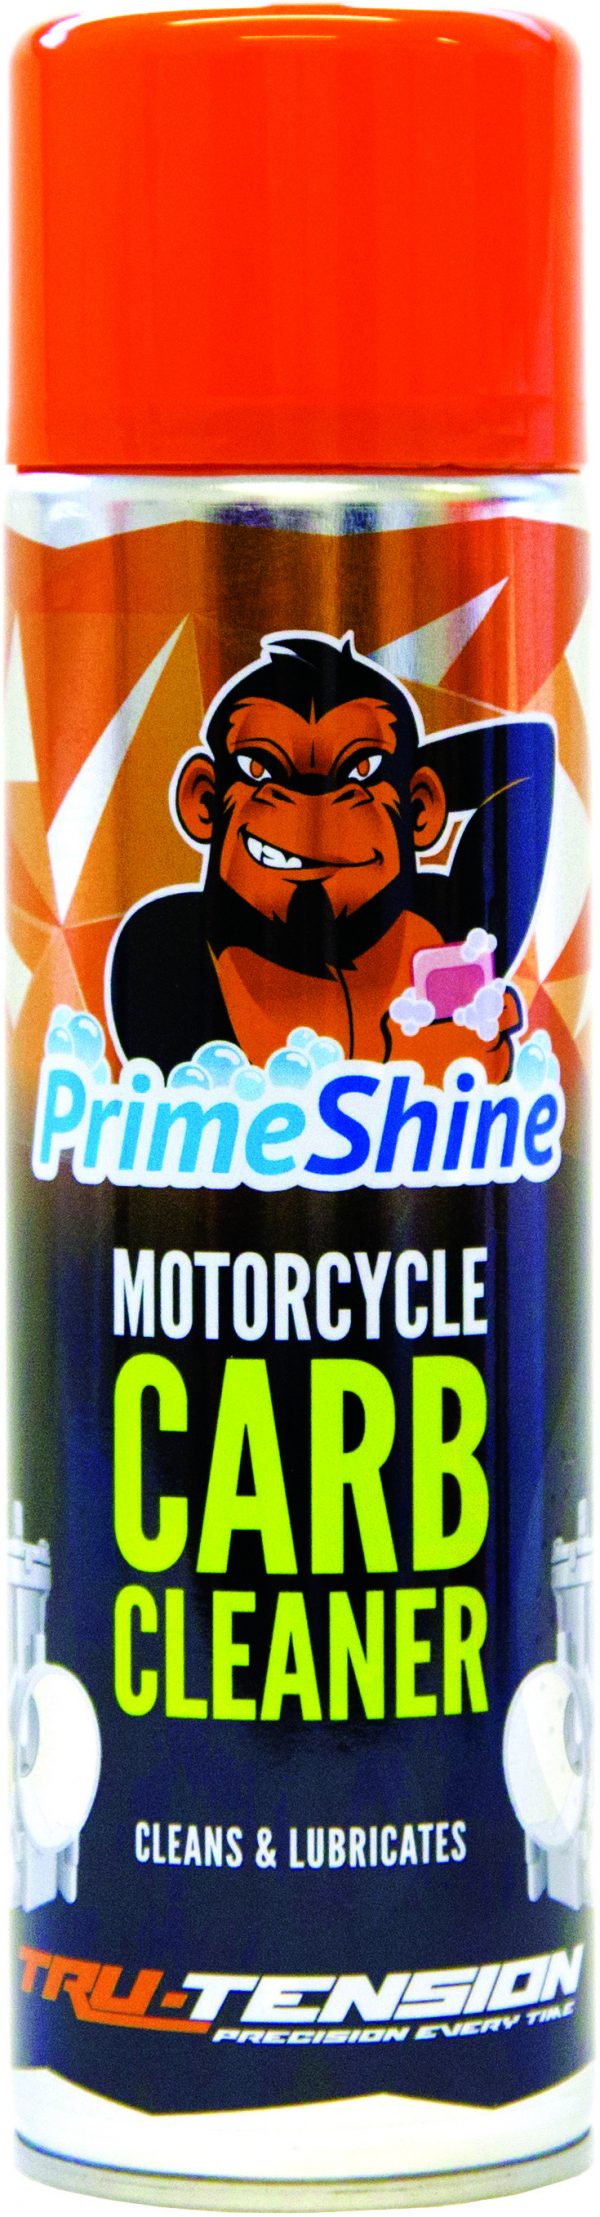 Primeshine Carb Cleaner Image